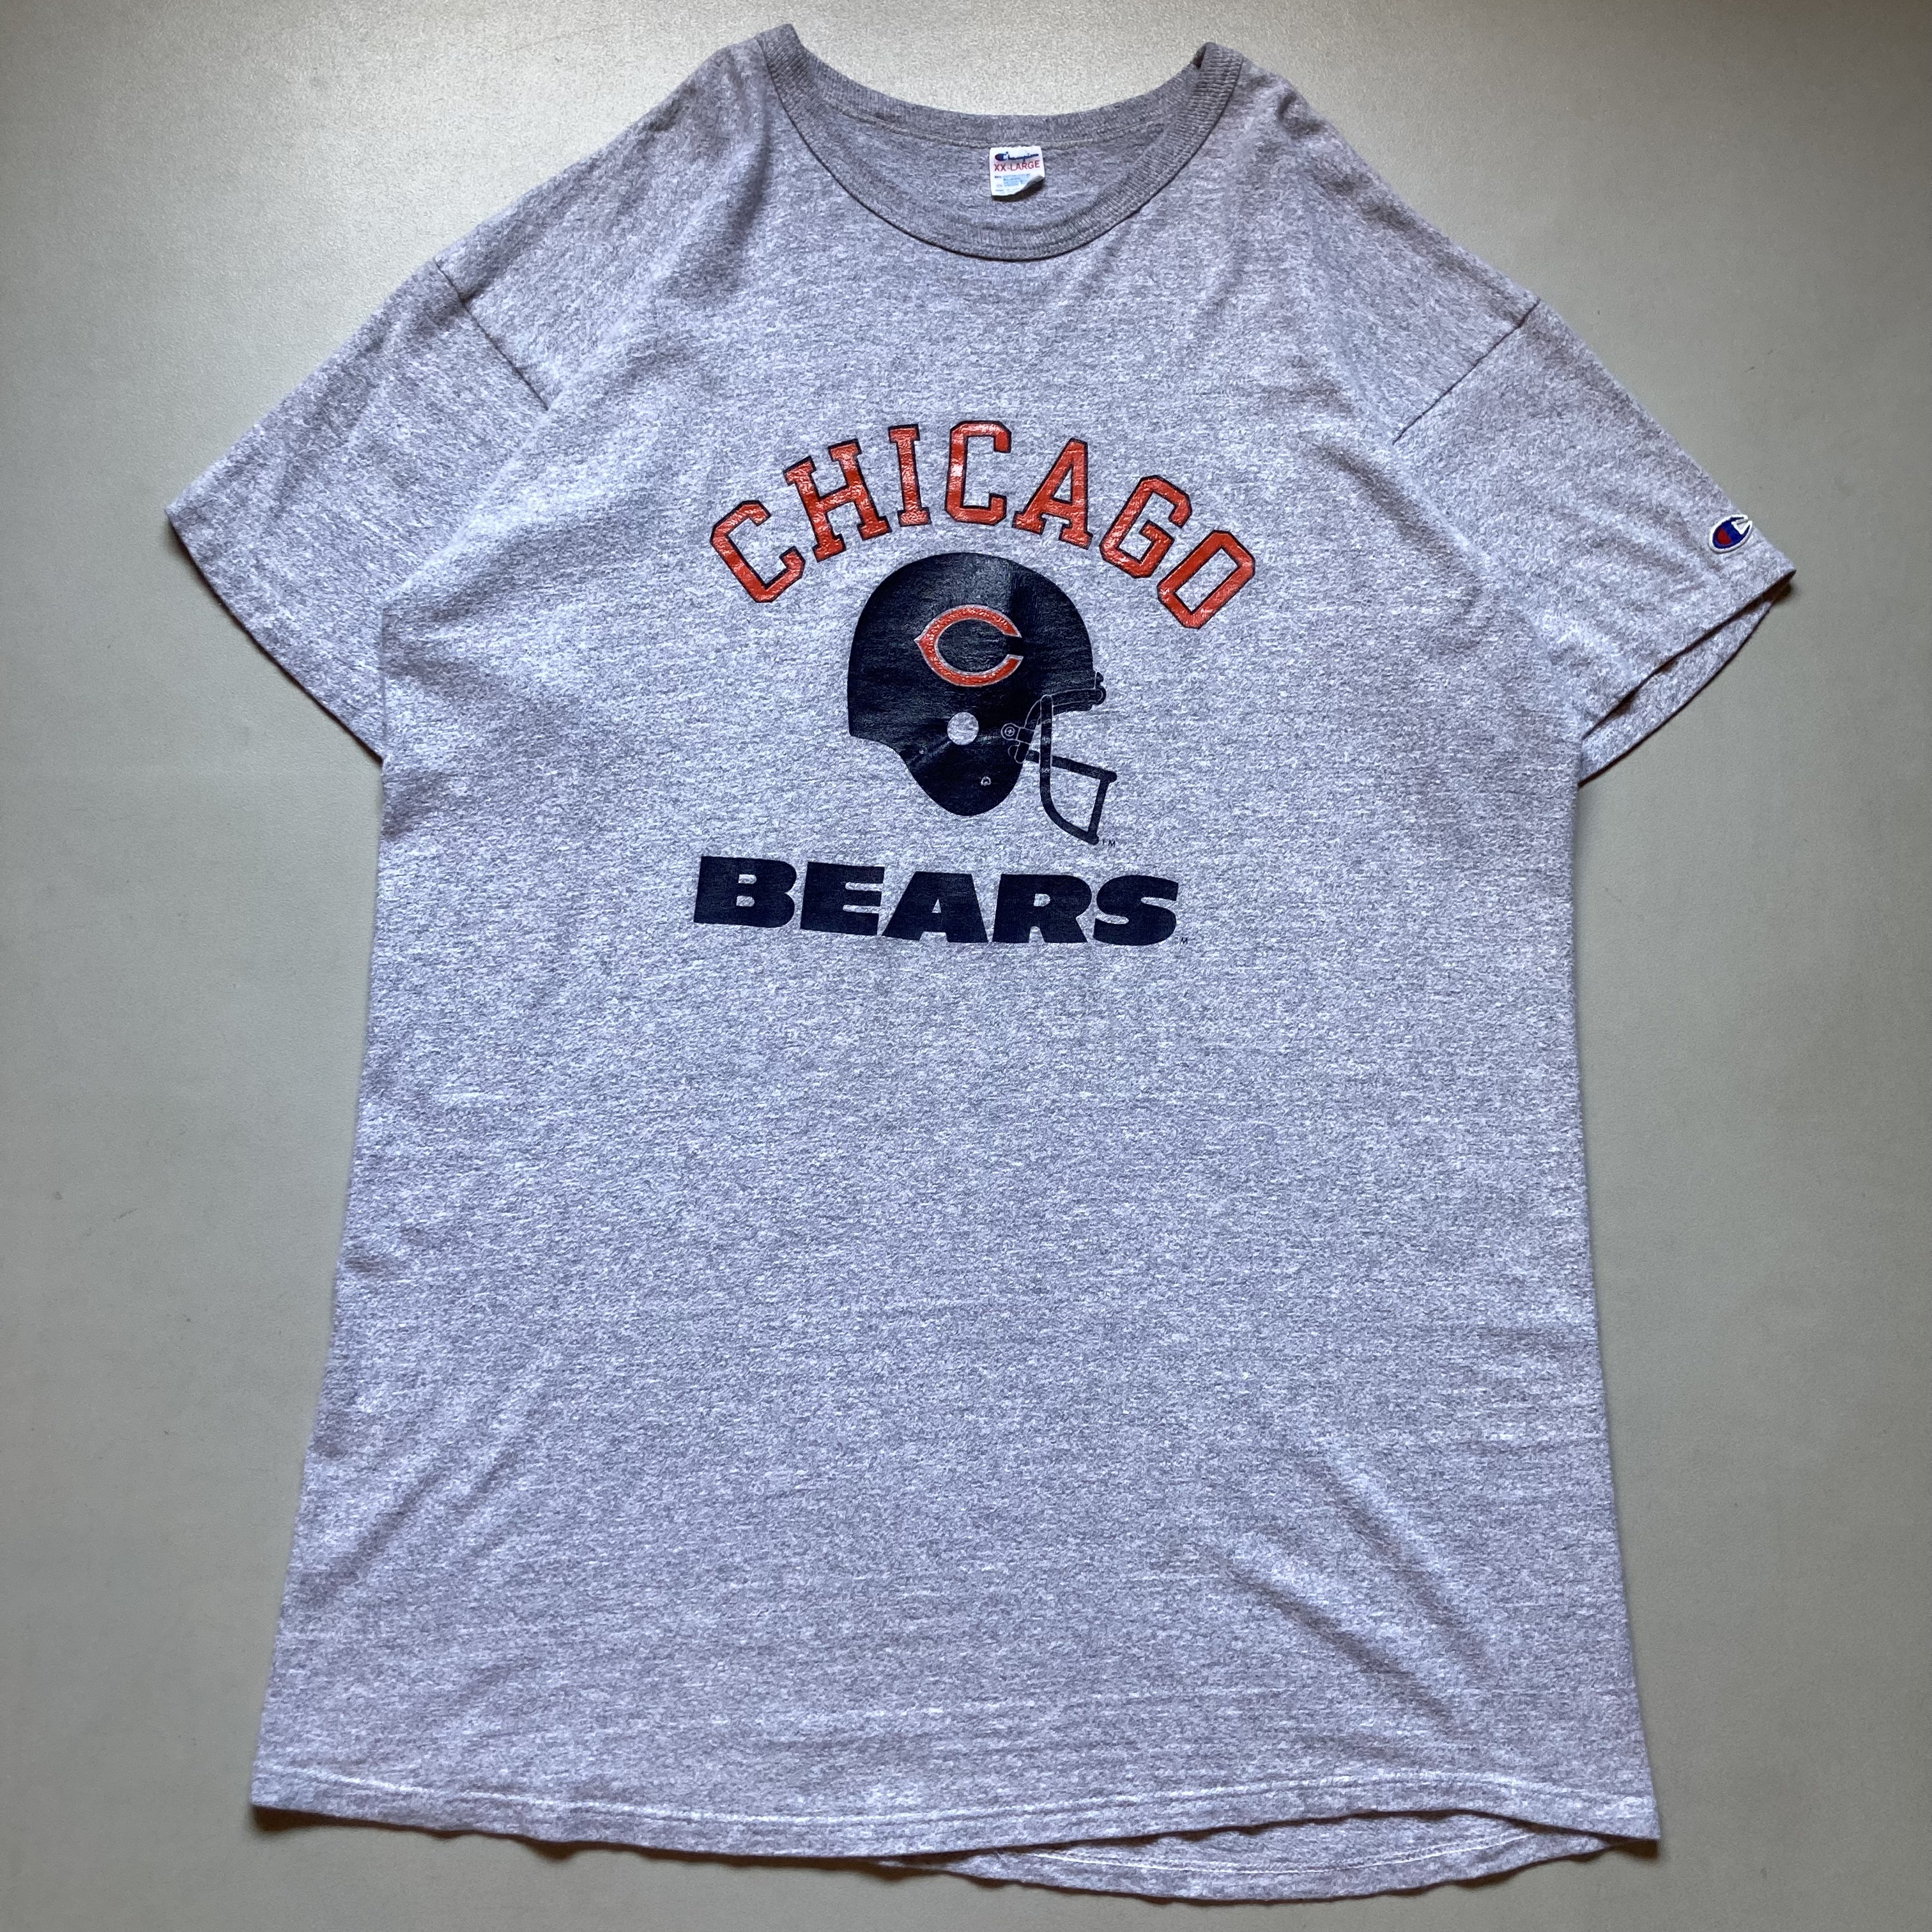 ★80s Champion CHICAGO BEARS Tシャツ アメリカ製